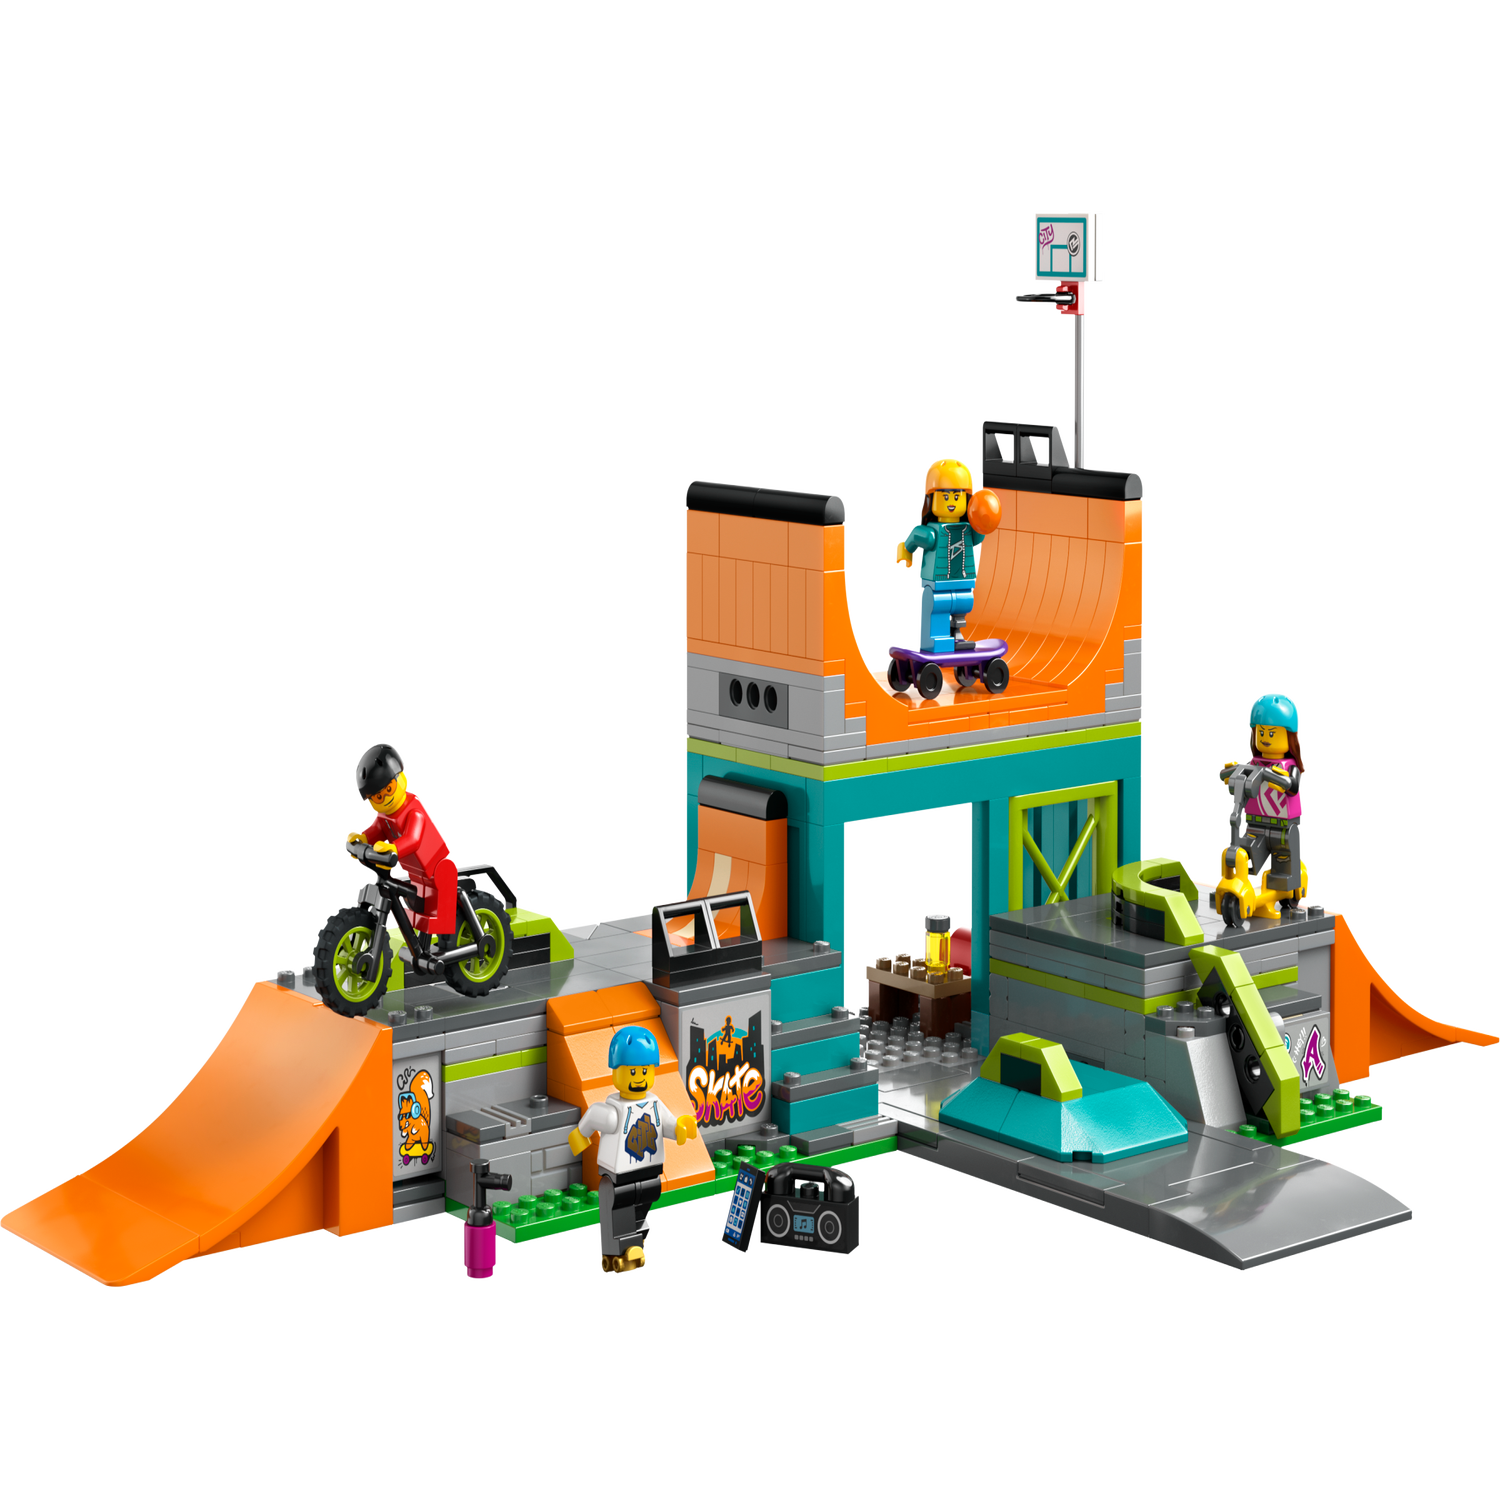 Street Skate Park 60364 | City | Buy online at the Official LEGO® Shop US